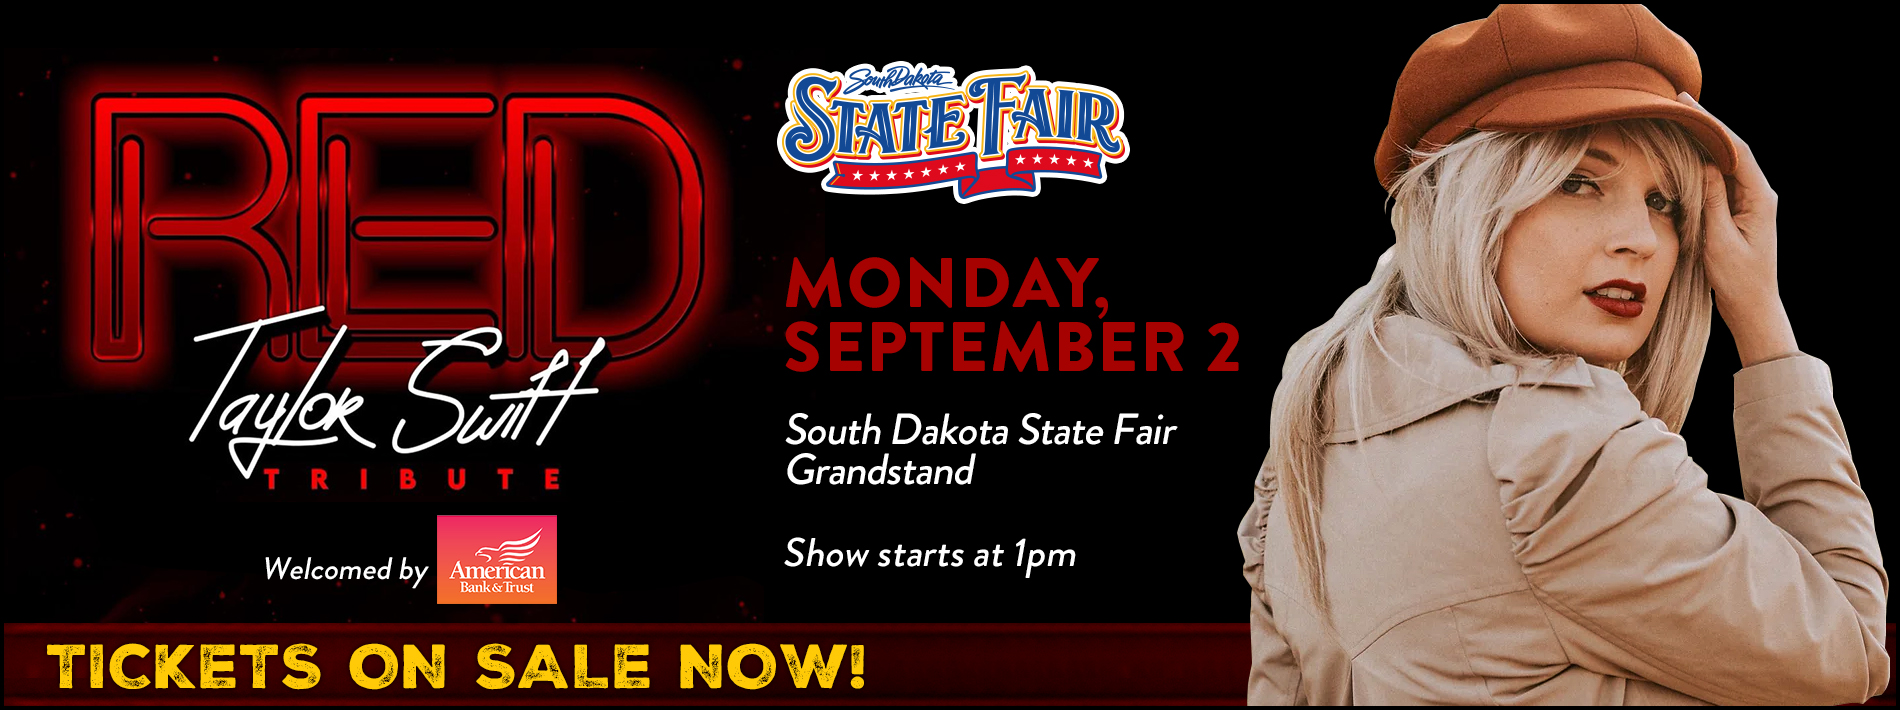 Various promotional slides regarding upcoming events happening at the South Dakota State Fair Fairgrounds.